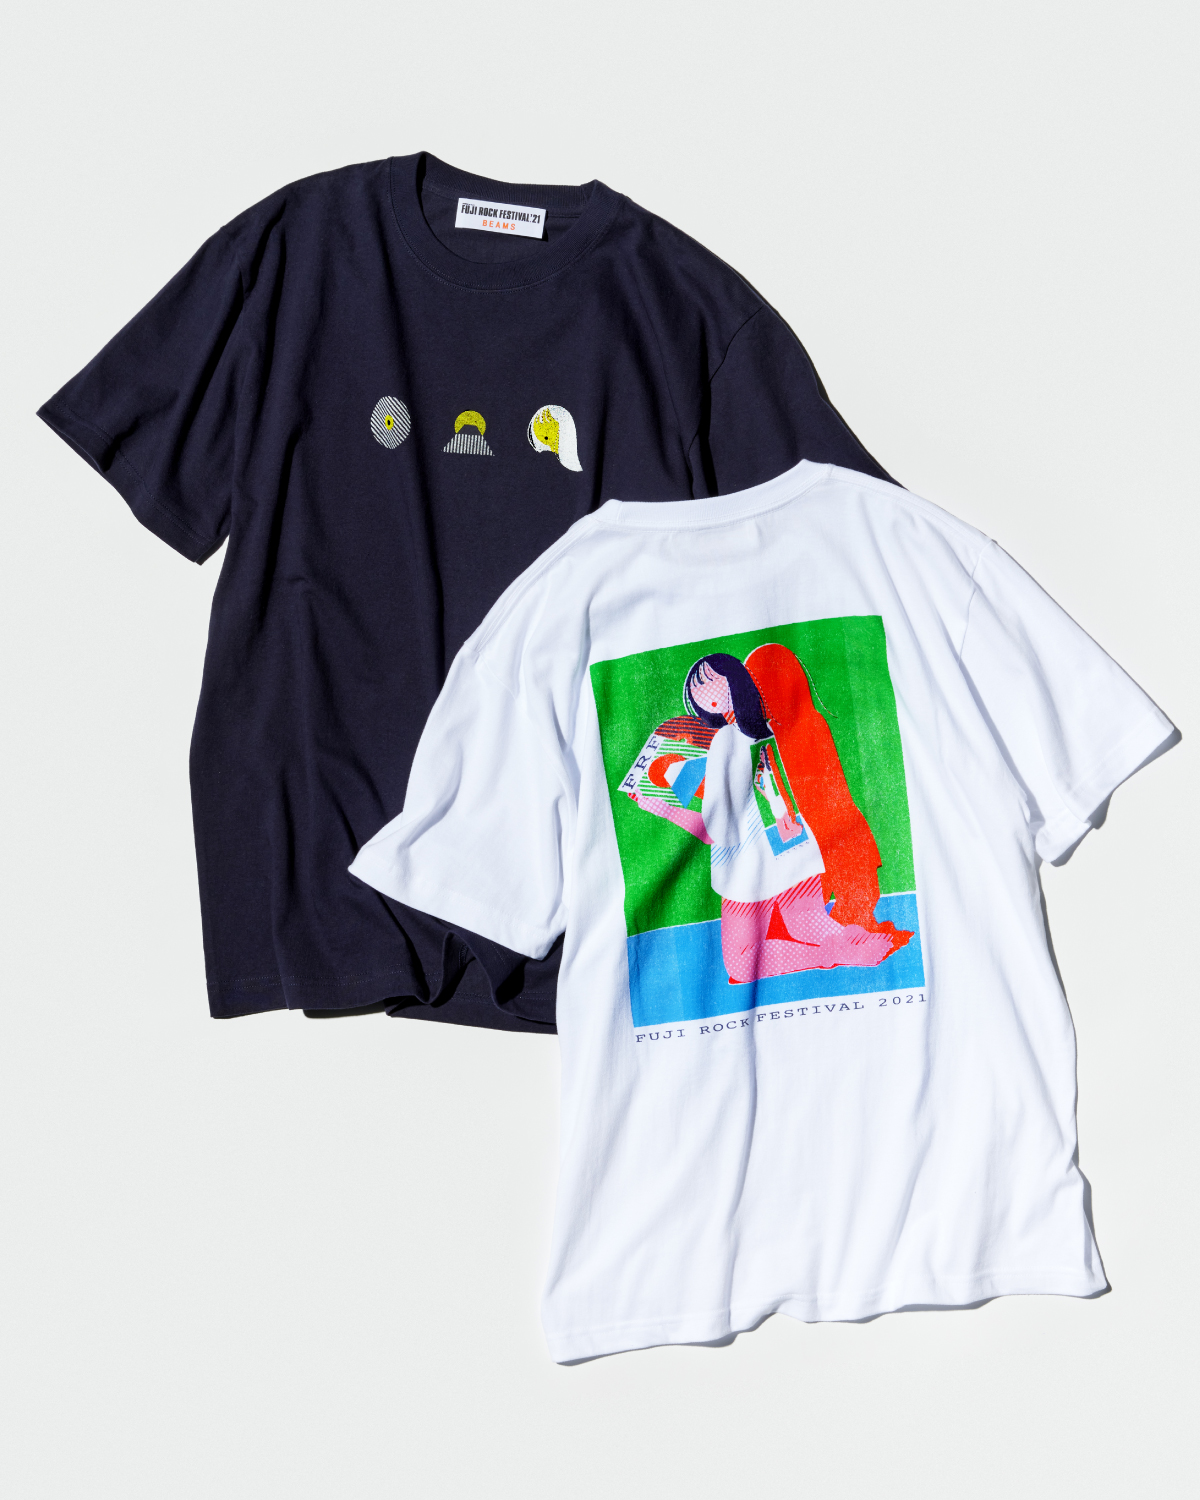 Beams Fuji Rock公式tシャツ発売 Highsnobiety Jp ハイスノバイエティ